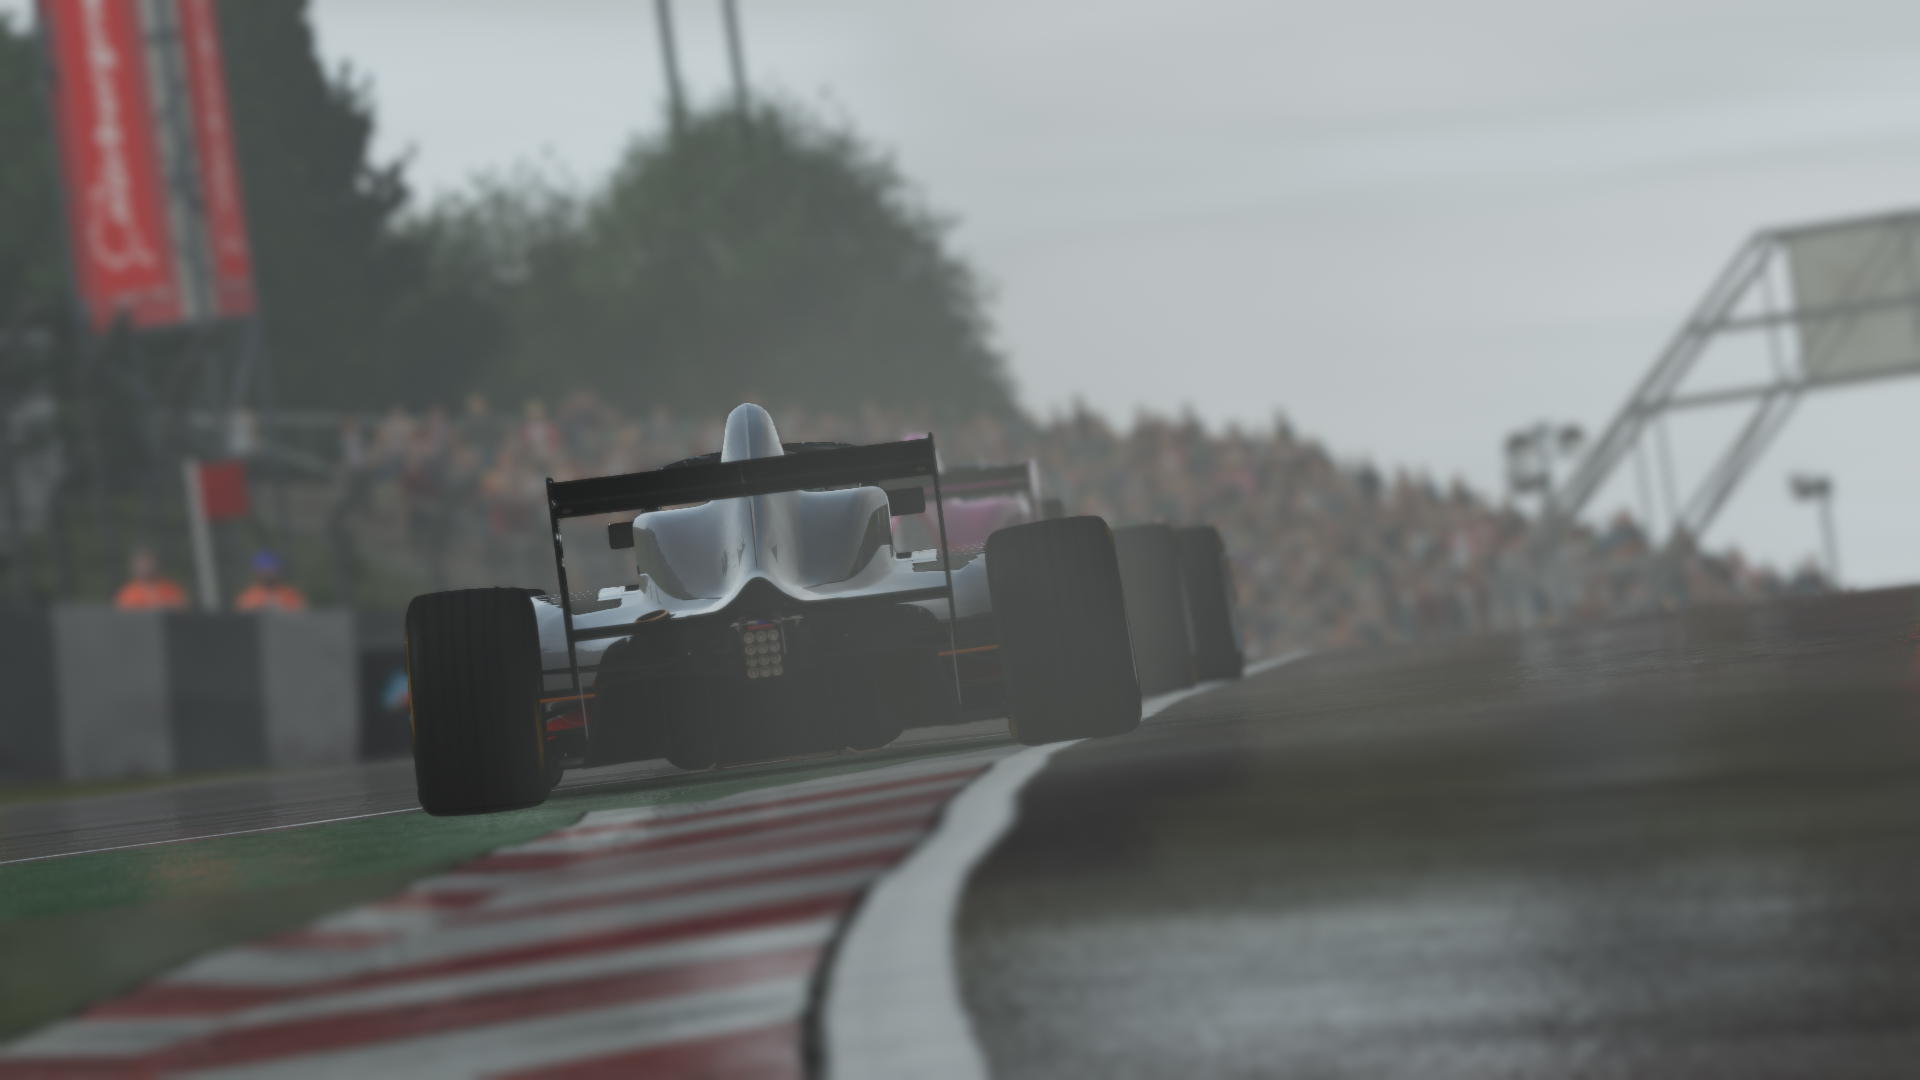 F1 22 Gameplay: VIRTUAL REALITY RACING! CRASHING IN VR! HEAVY RAIN!  IMMERSIVE PITSTOP! 